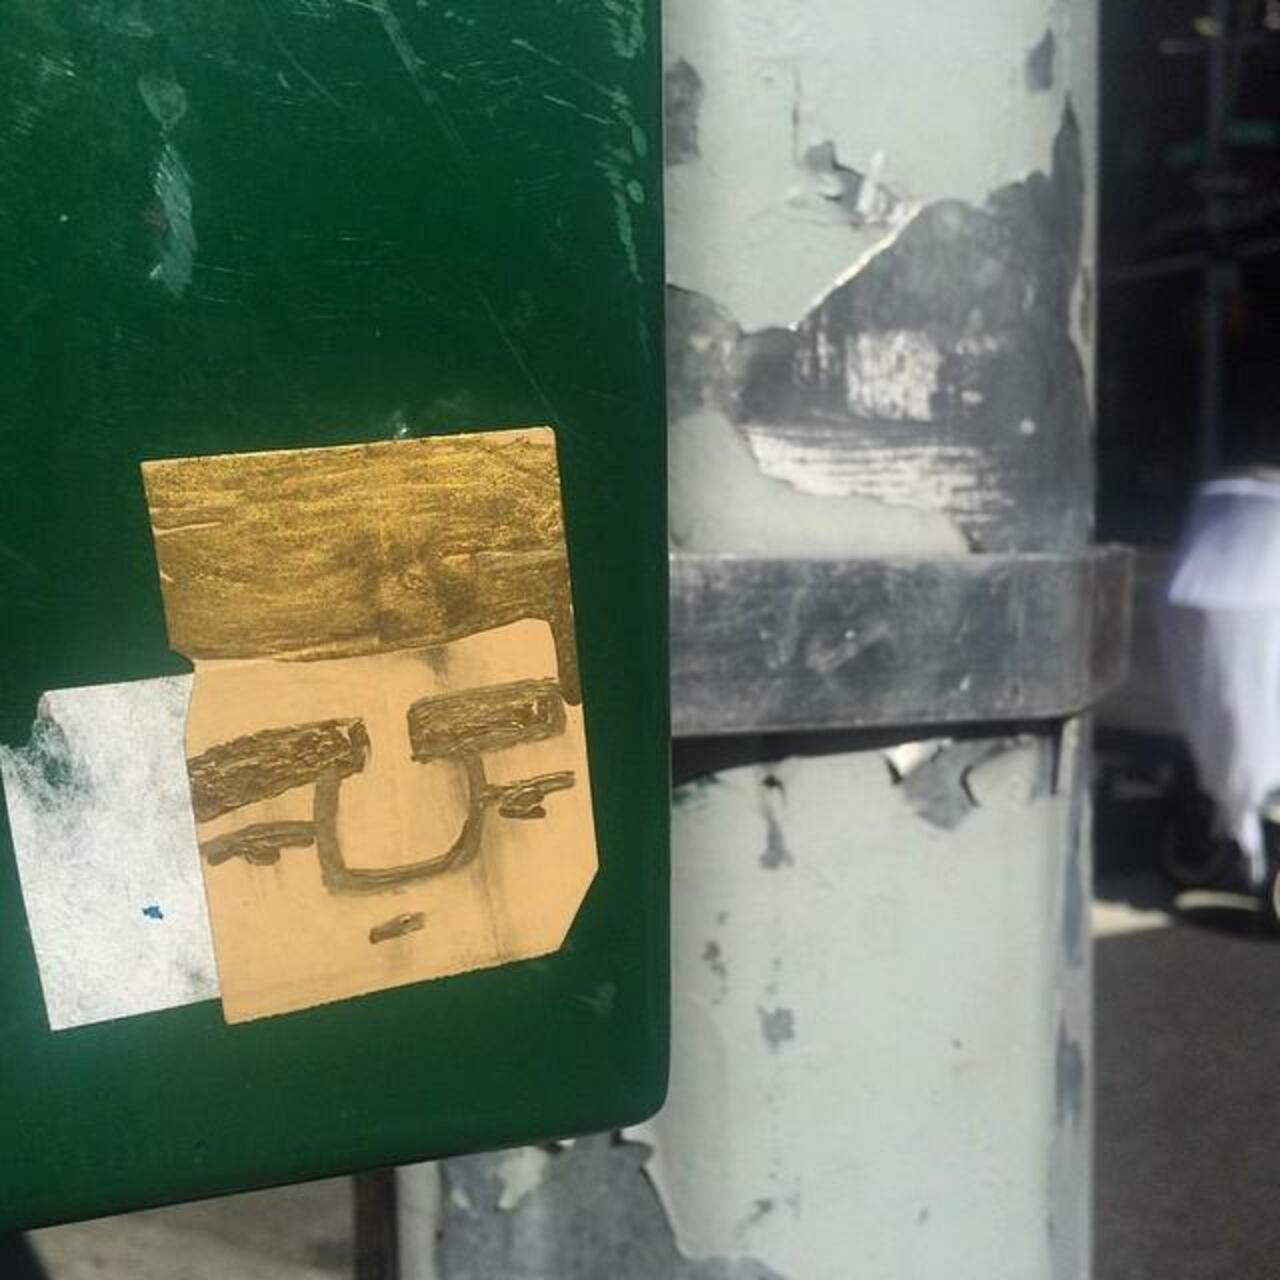 Sticker Art
Avenue of the Americas NYC
#sticker #slap #art #slaps #slapsnyc #graff #graffiti #graffitiart #outsid... http://t.co/biydQ13xhk